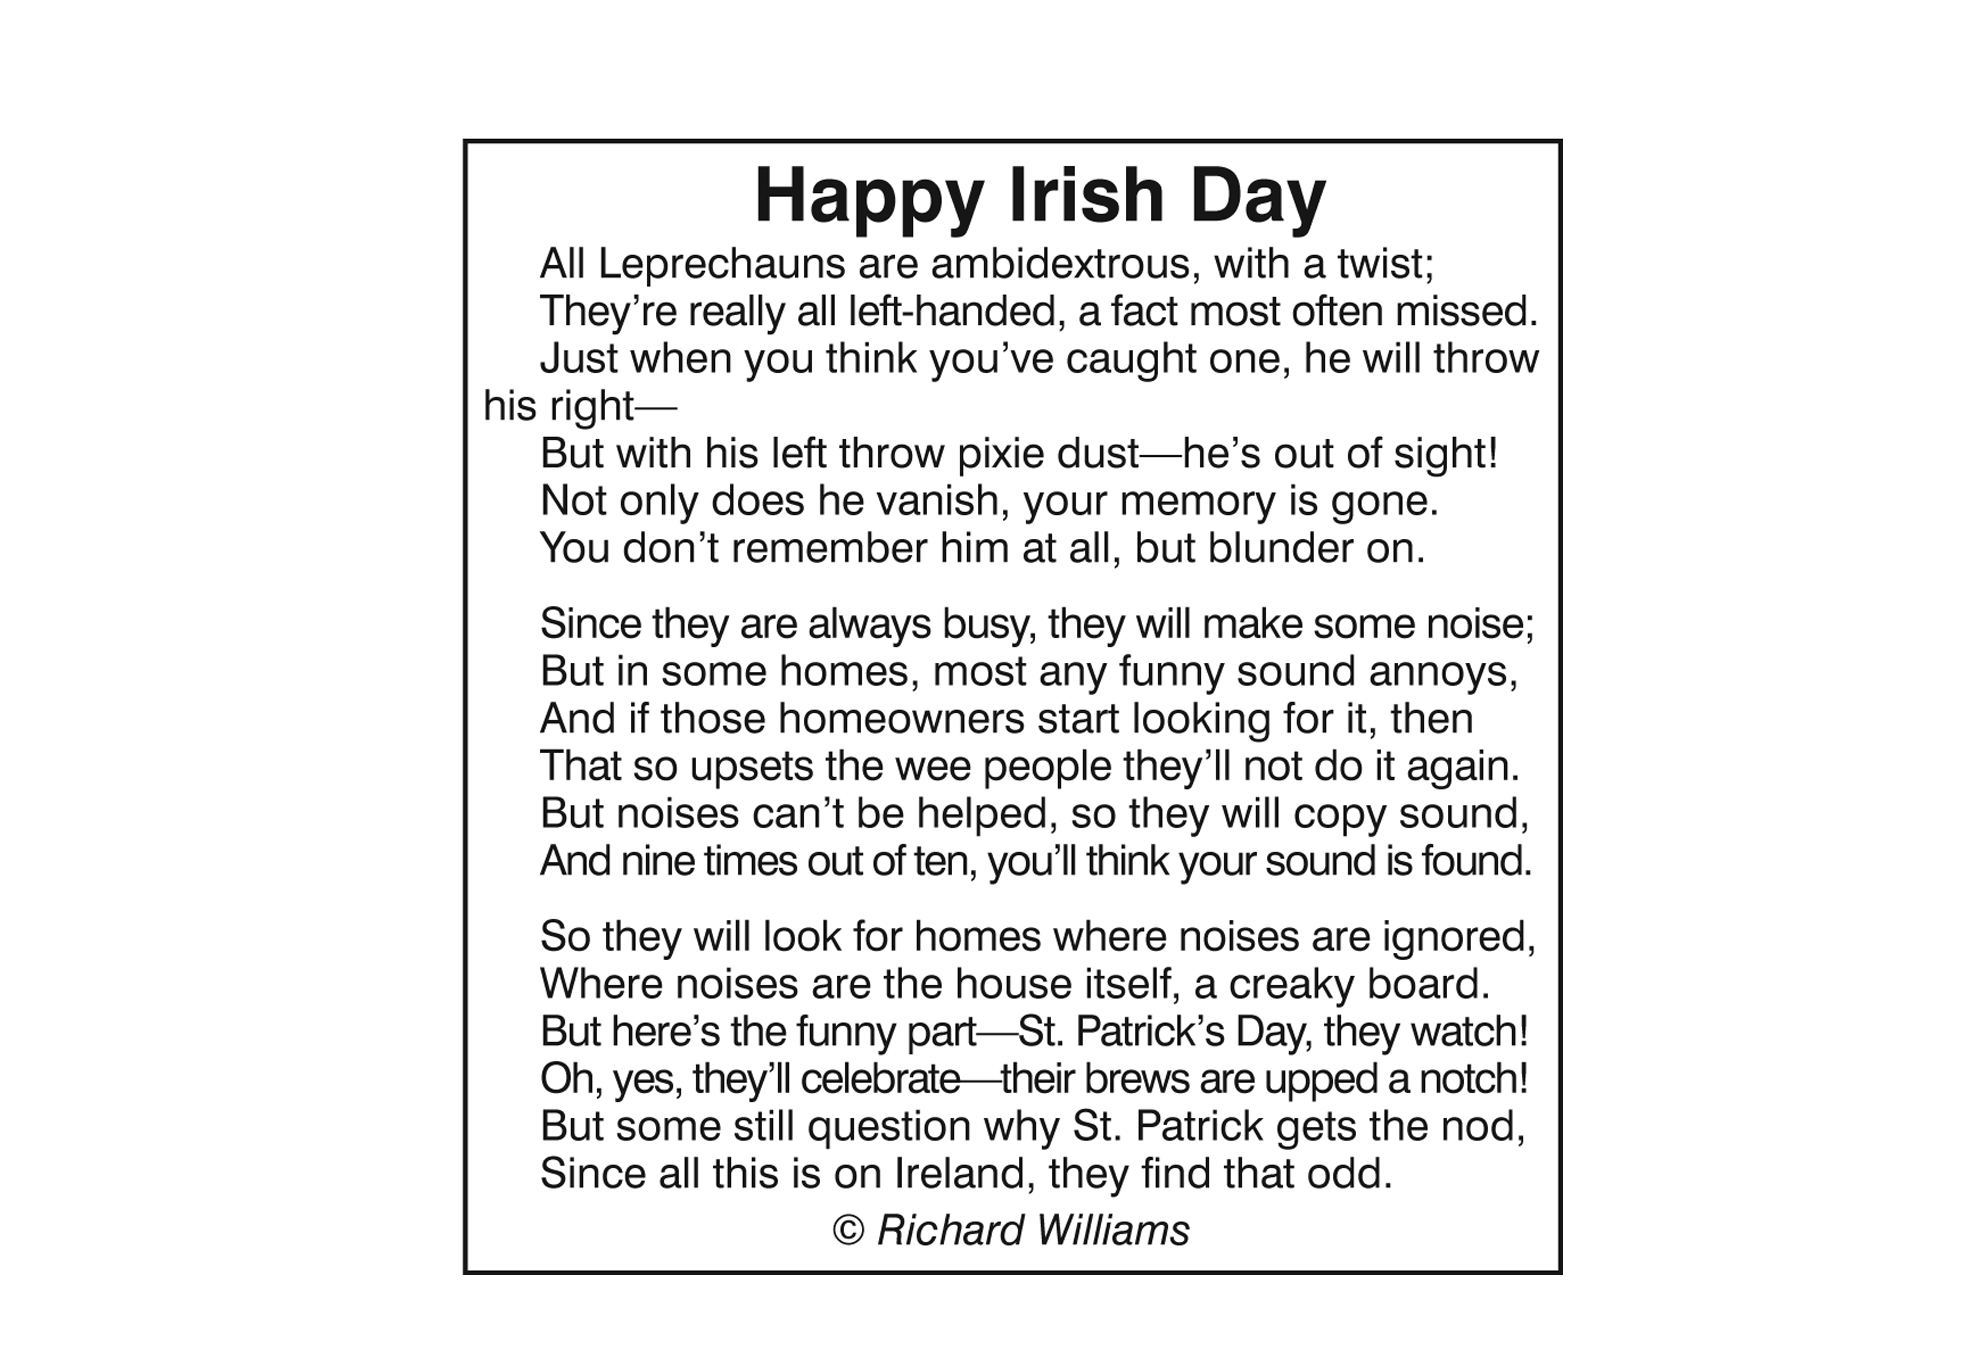 Richard Williams Poem: Happy Irish Day